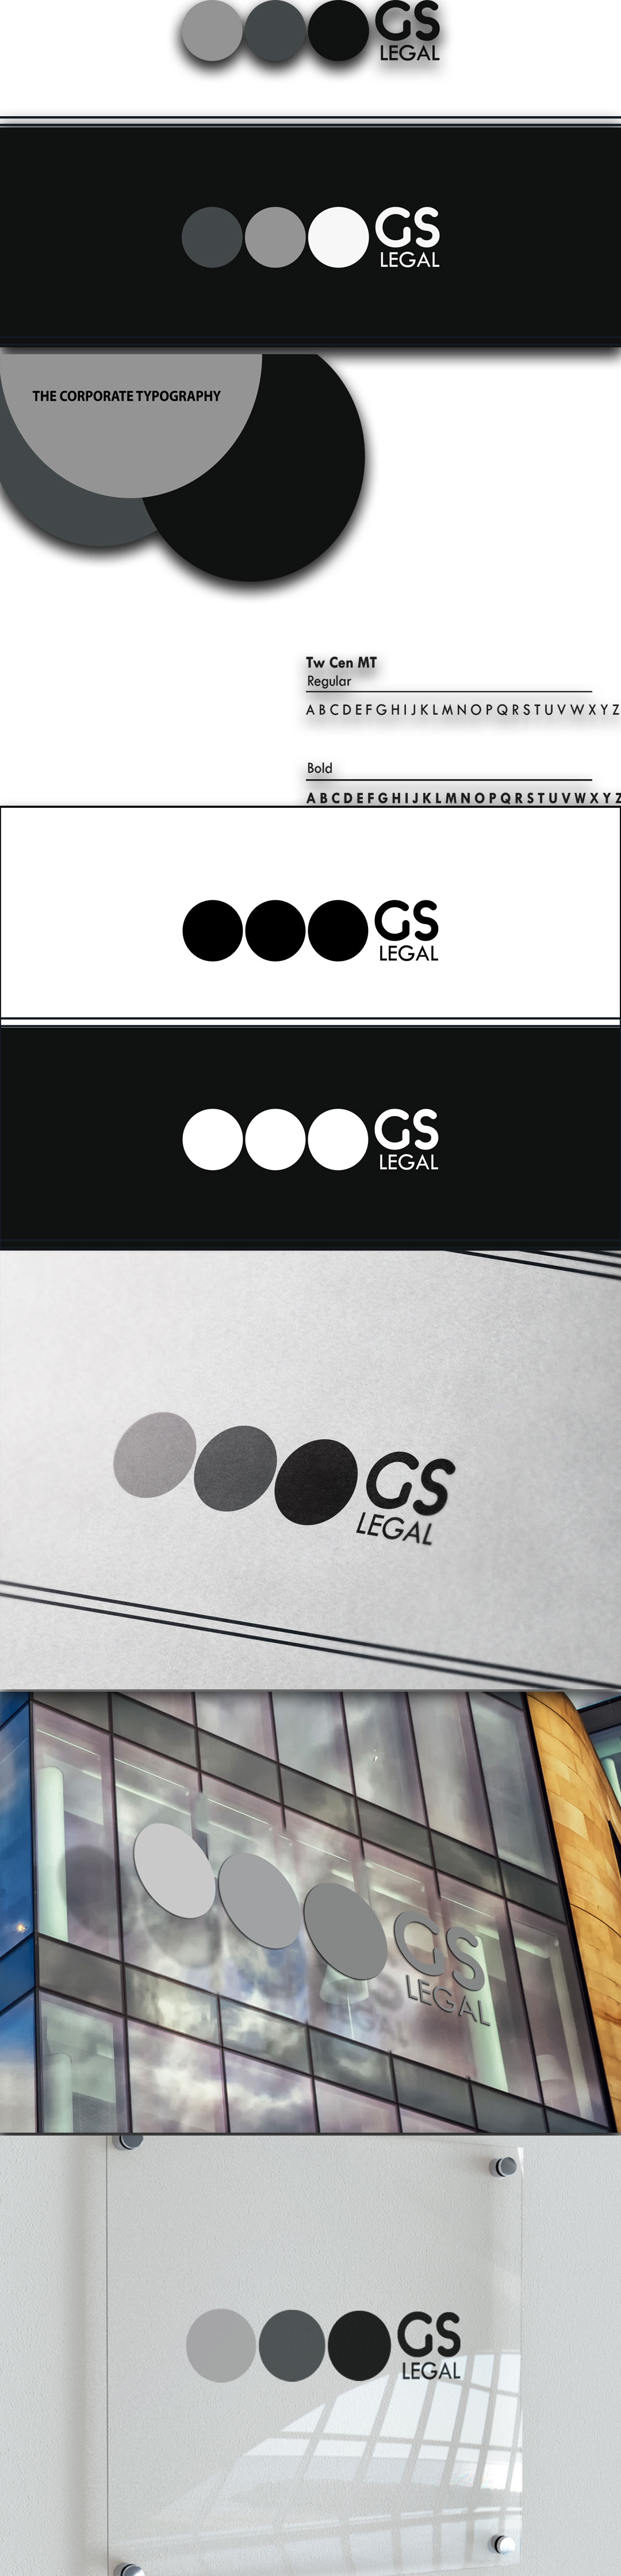 GS Legal